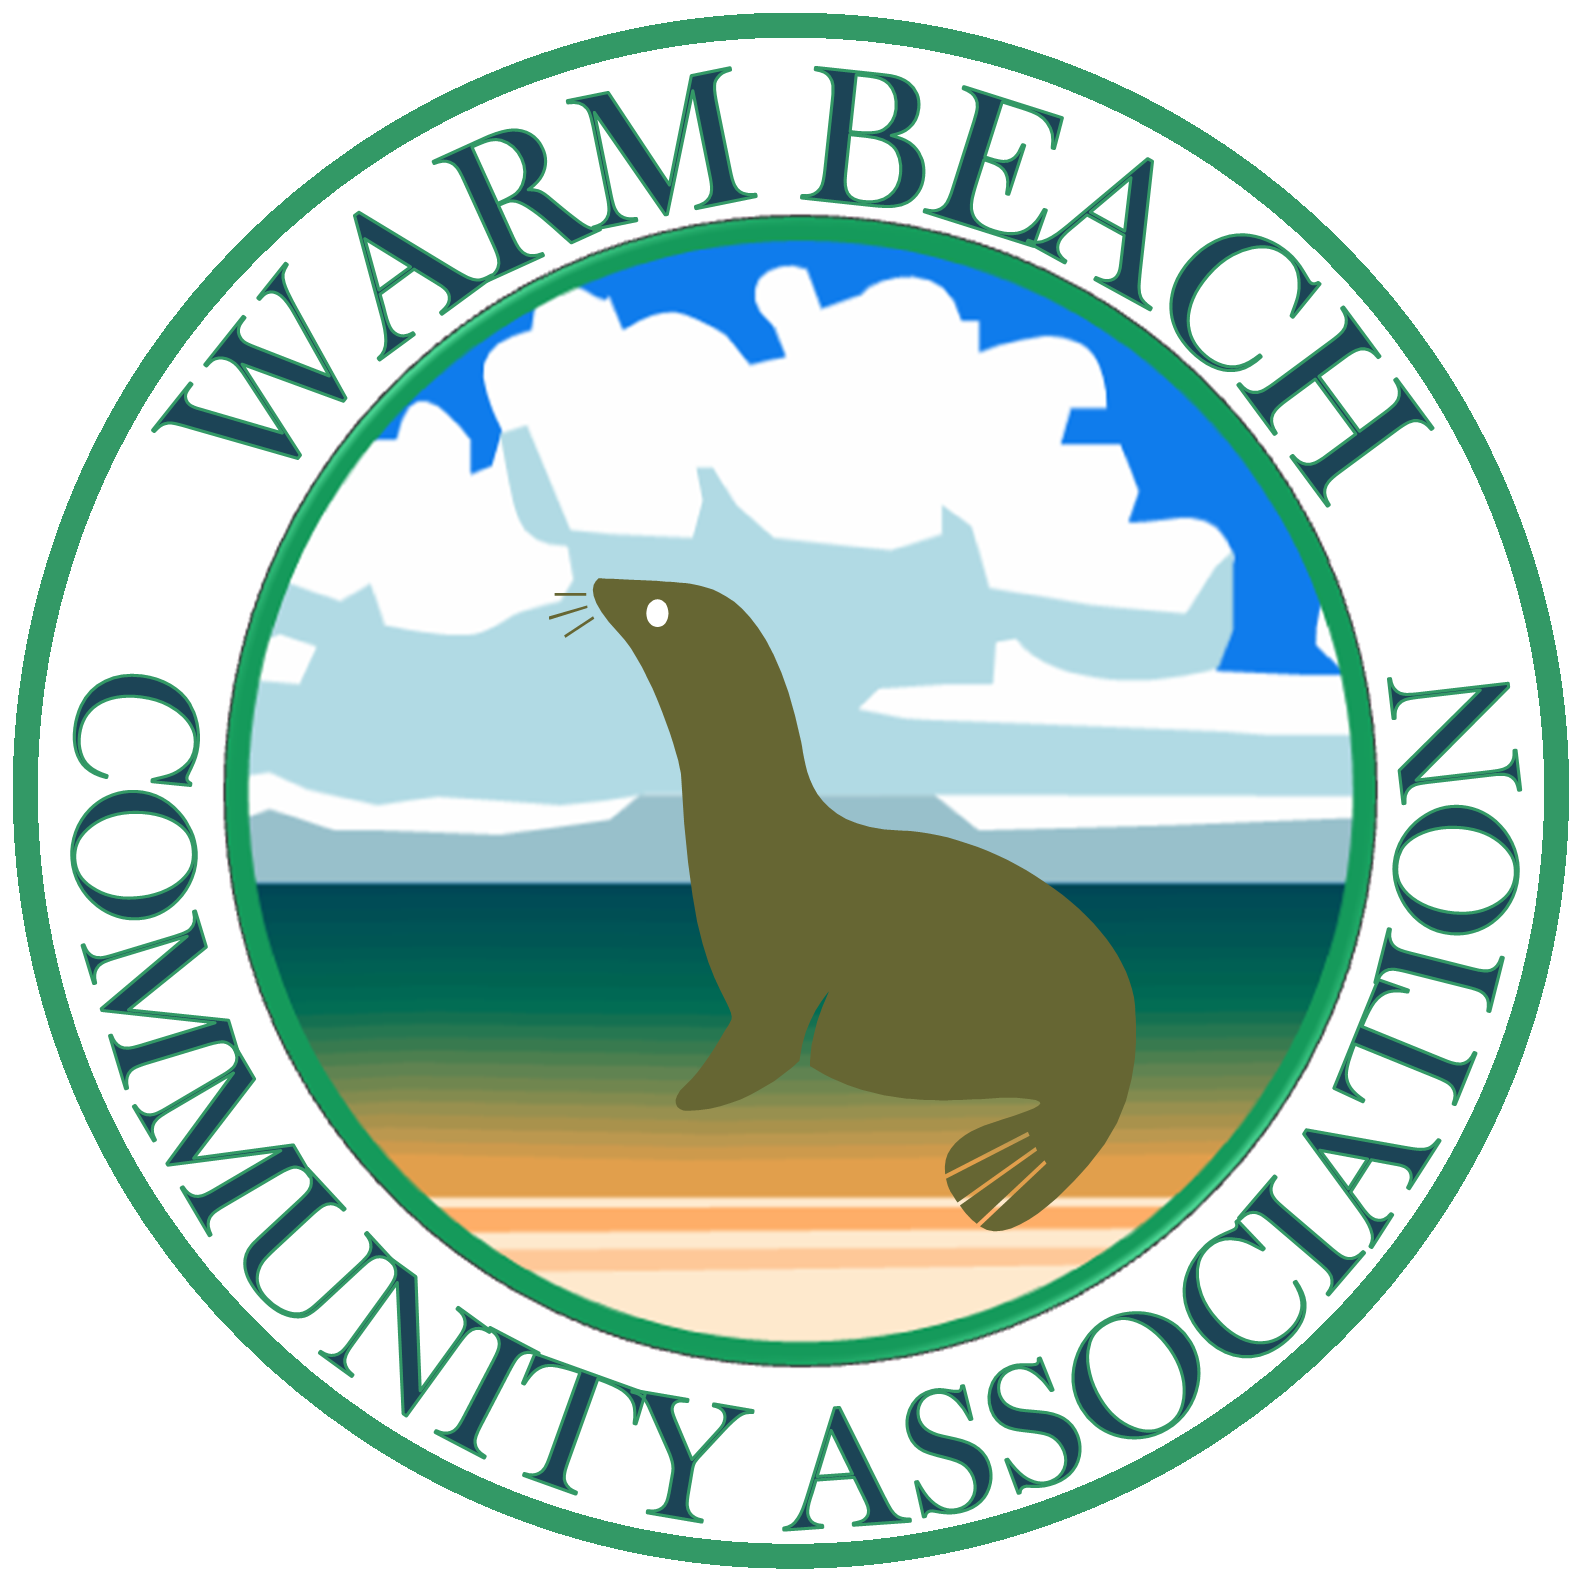 WBCA Calendar of Events Warm Beach Community Association